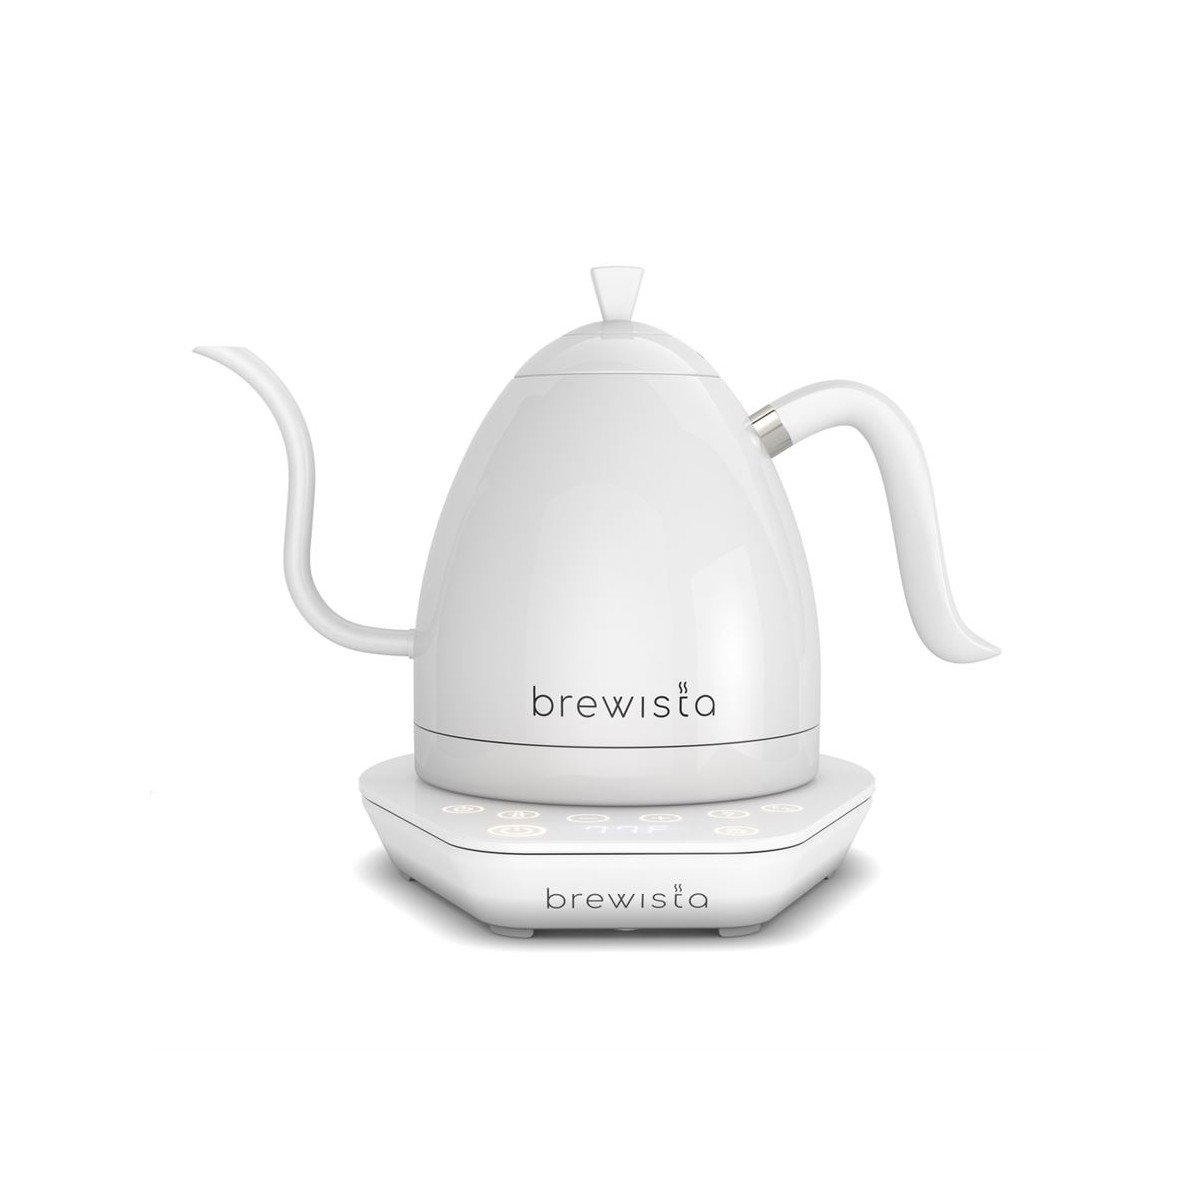 BREWISTA Artisan Digital Kettle Wasserkocher, Variable White All